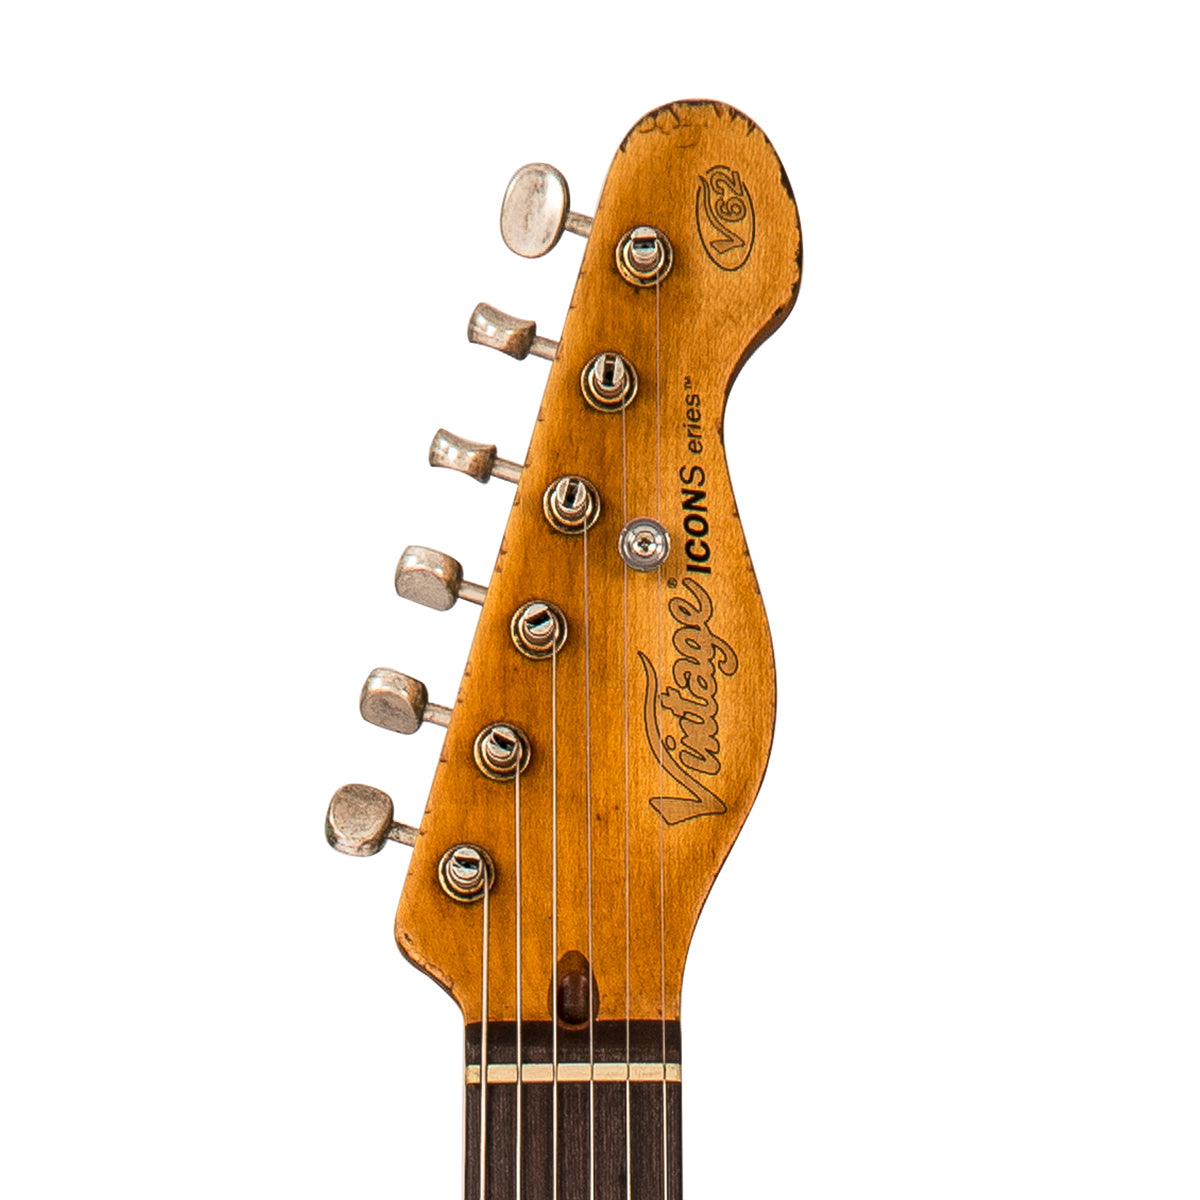 SOLD - Vintage V62 ProShop Unique ~ Blonde Heavy Relic, Electric Guitars for sale at Richards Guitars.